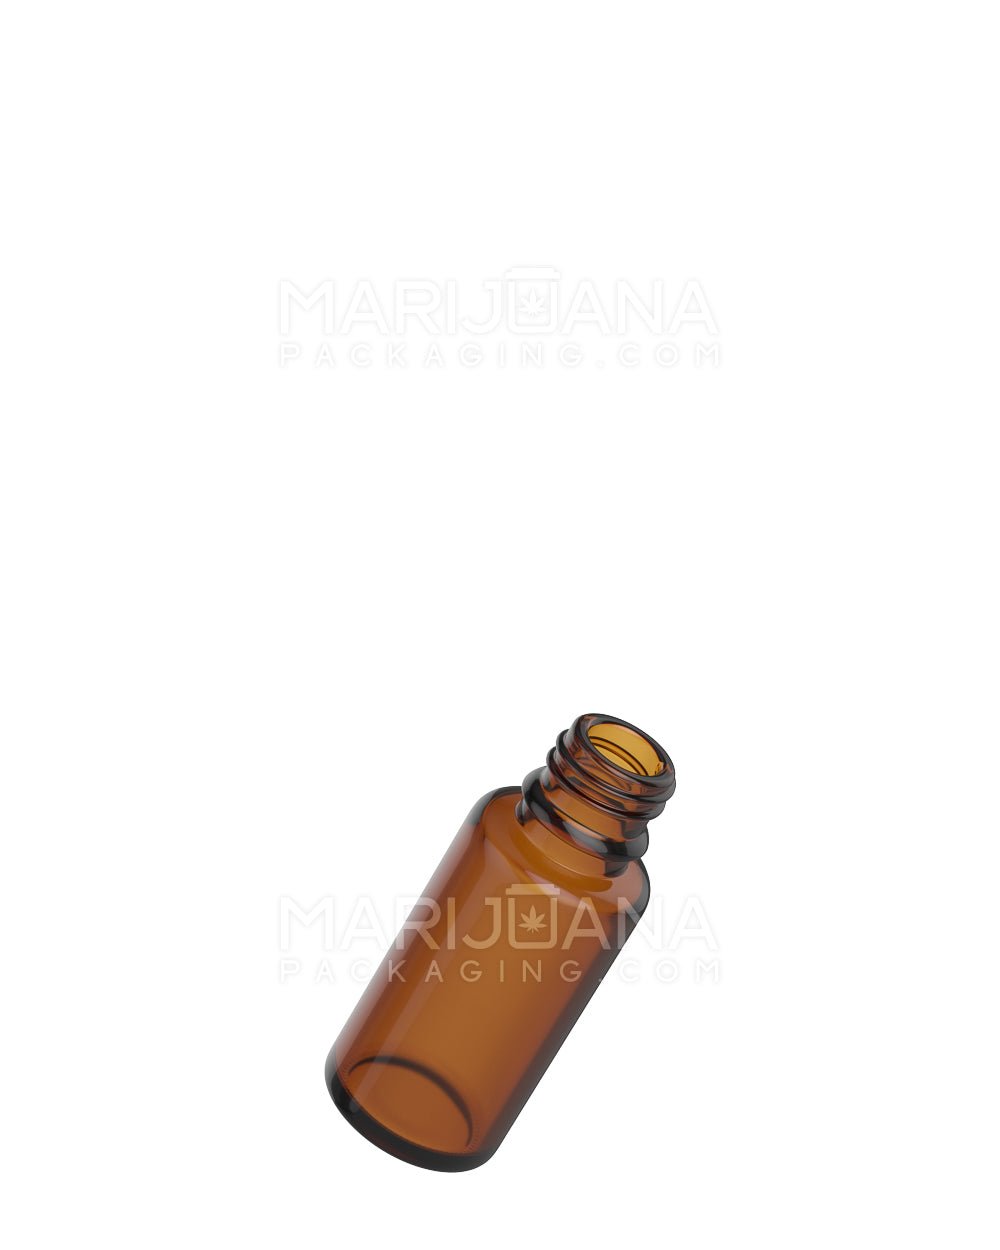 POLLEN GEAR | Sharp Shoulder Glass Tincture Dropper Bottles | 15mL - Amber - 252 Count - 5